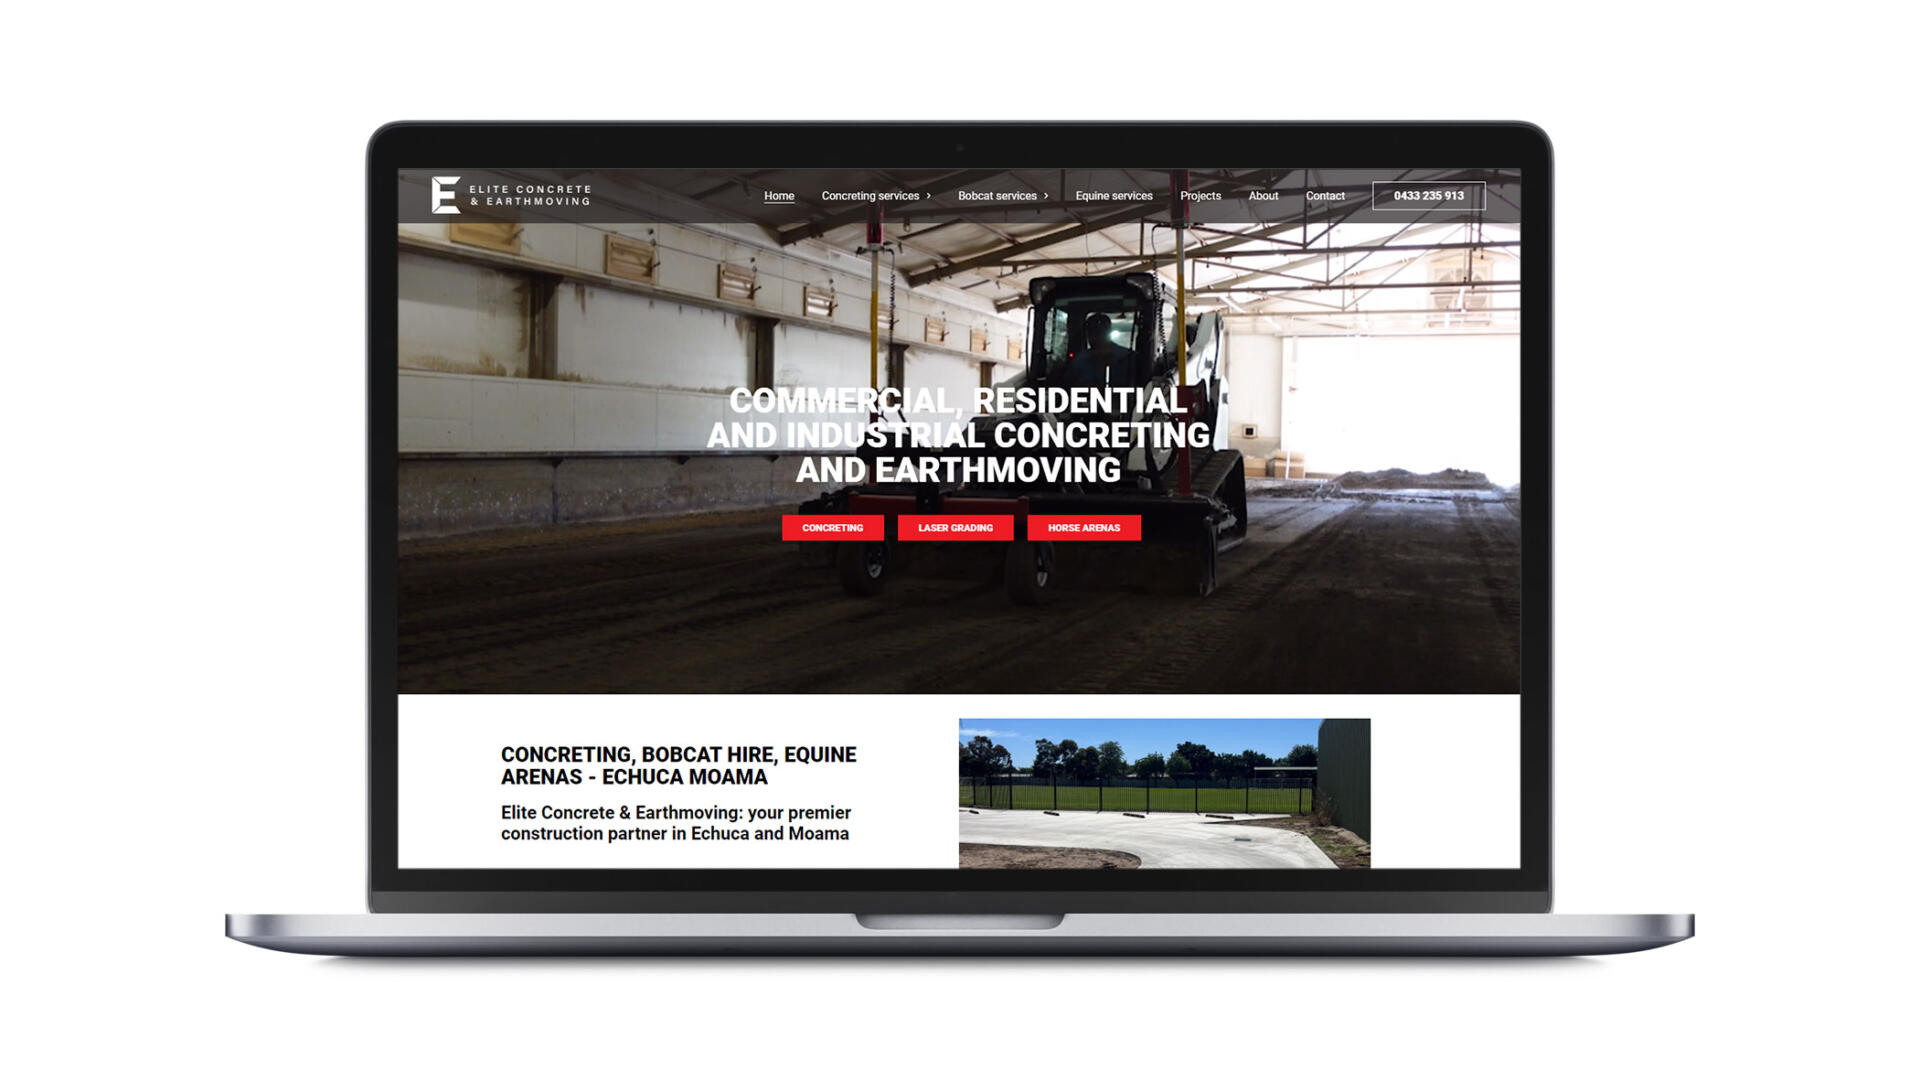 Open laptop showing custom website developed for Echuca Moama business